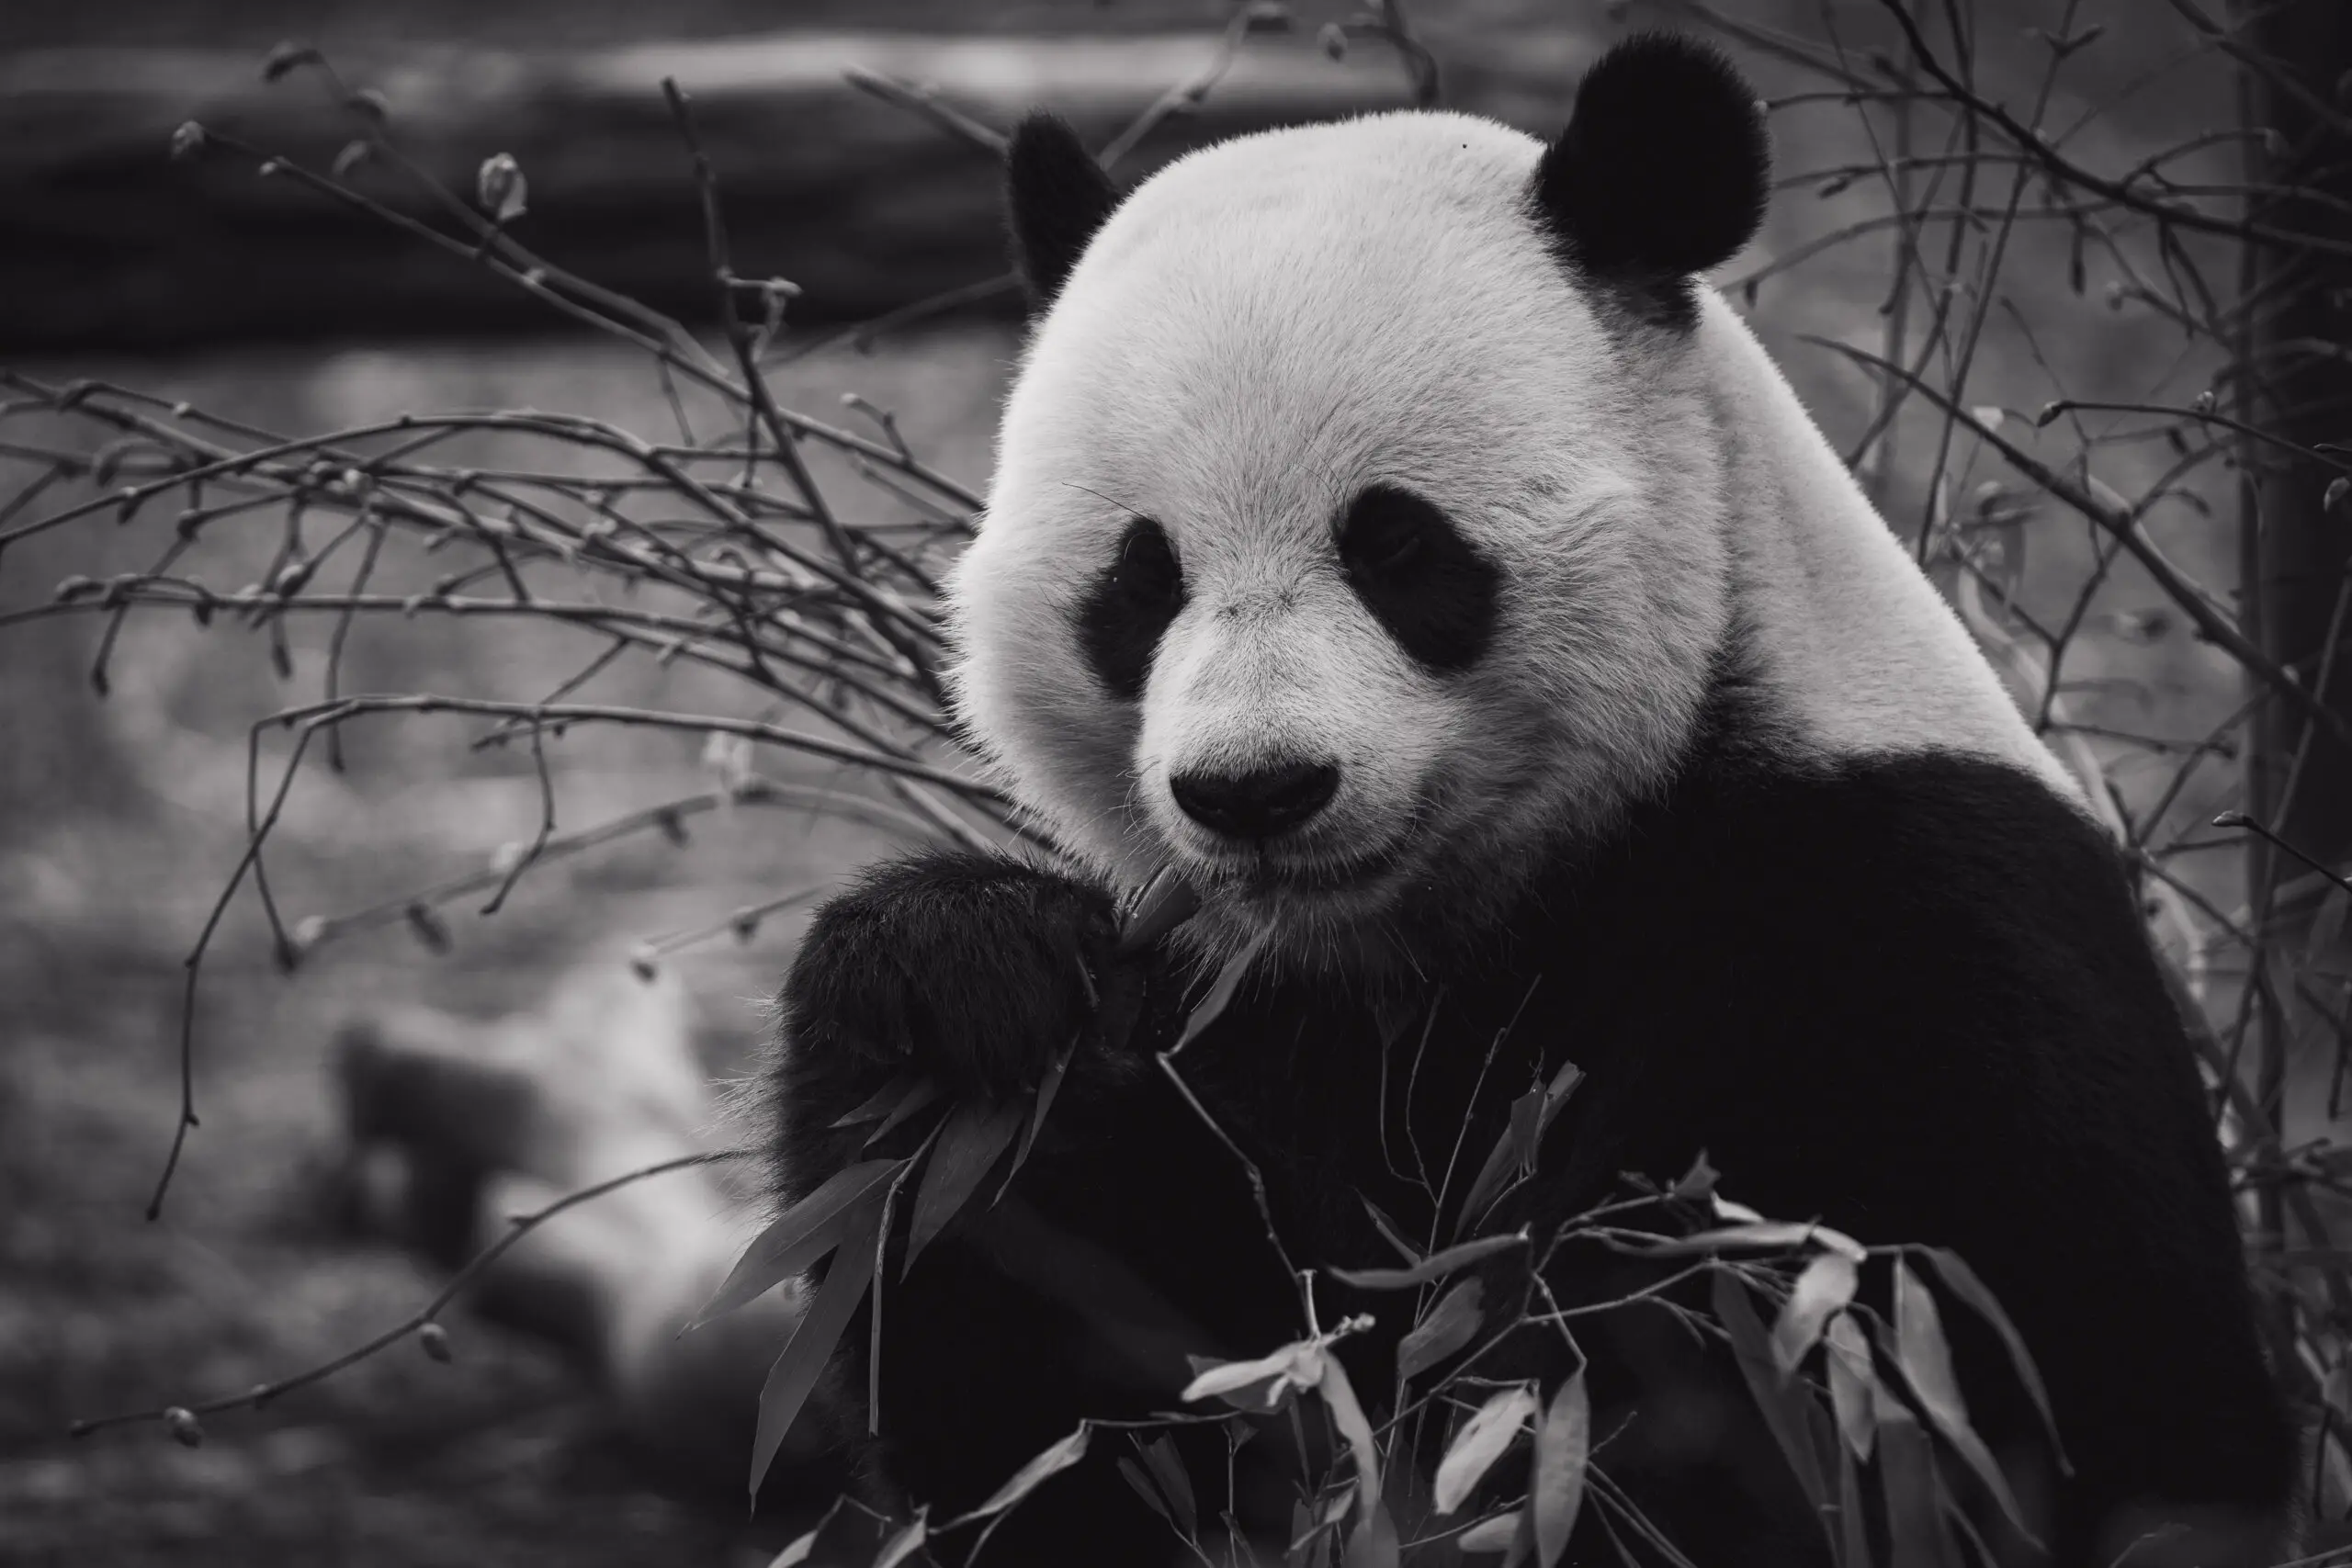 Panda bear eating bamboo leaves in zoo